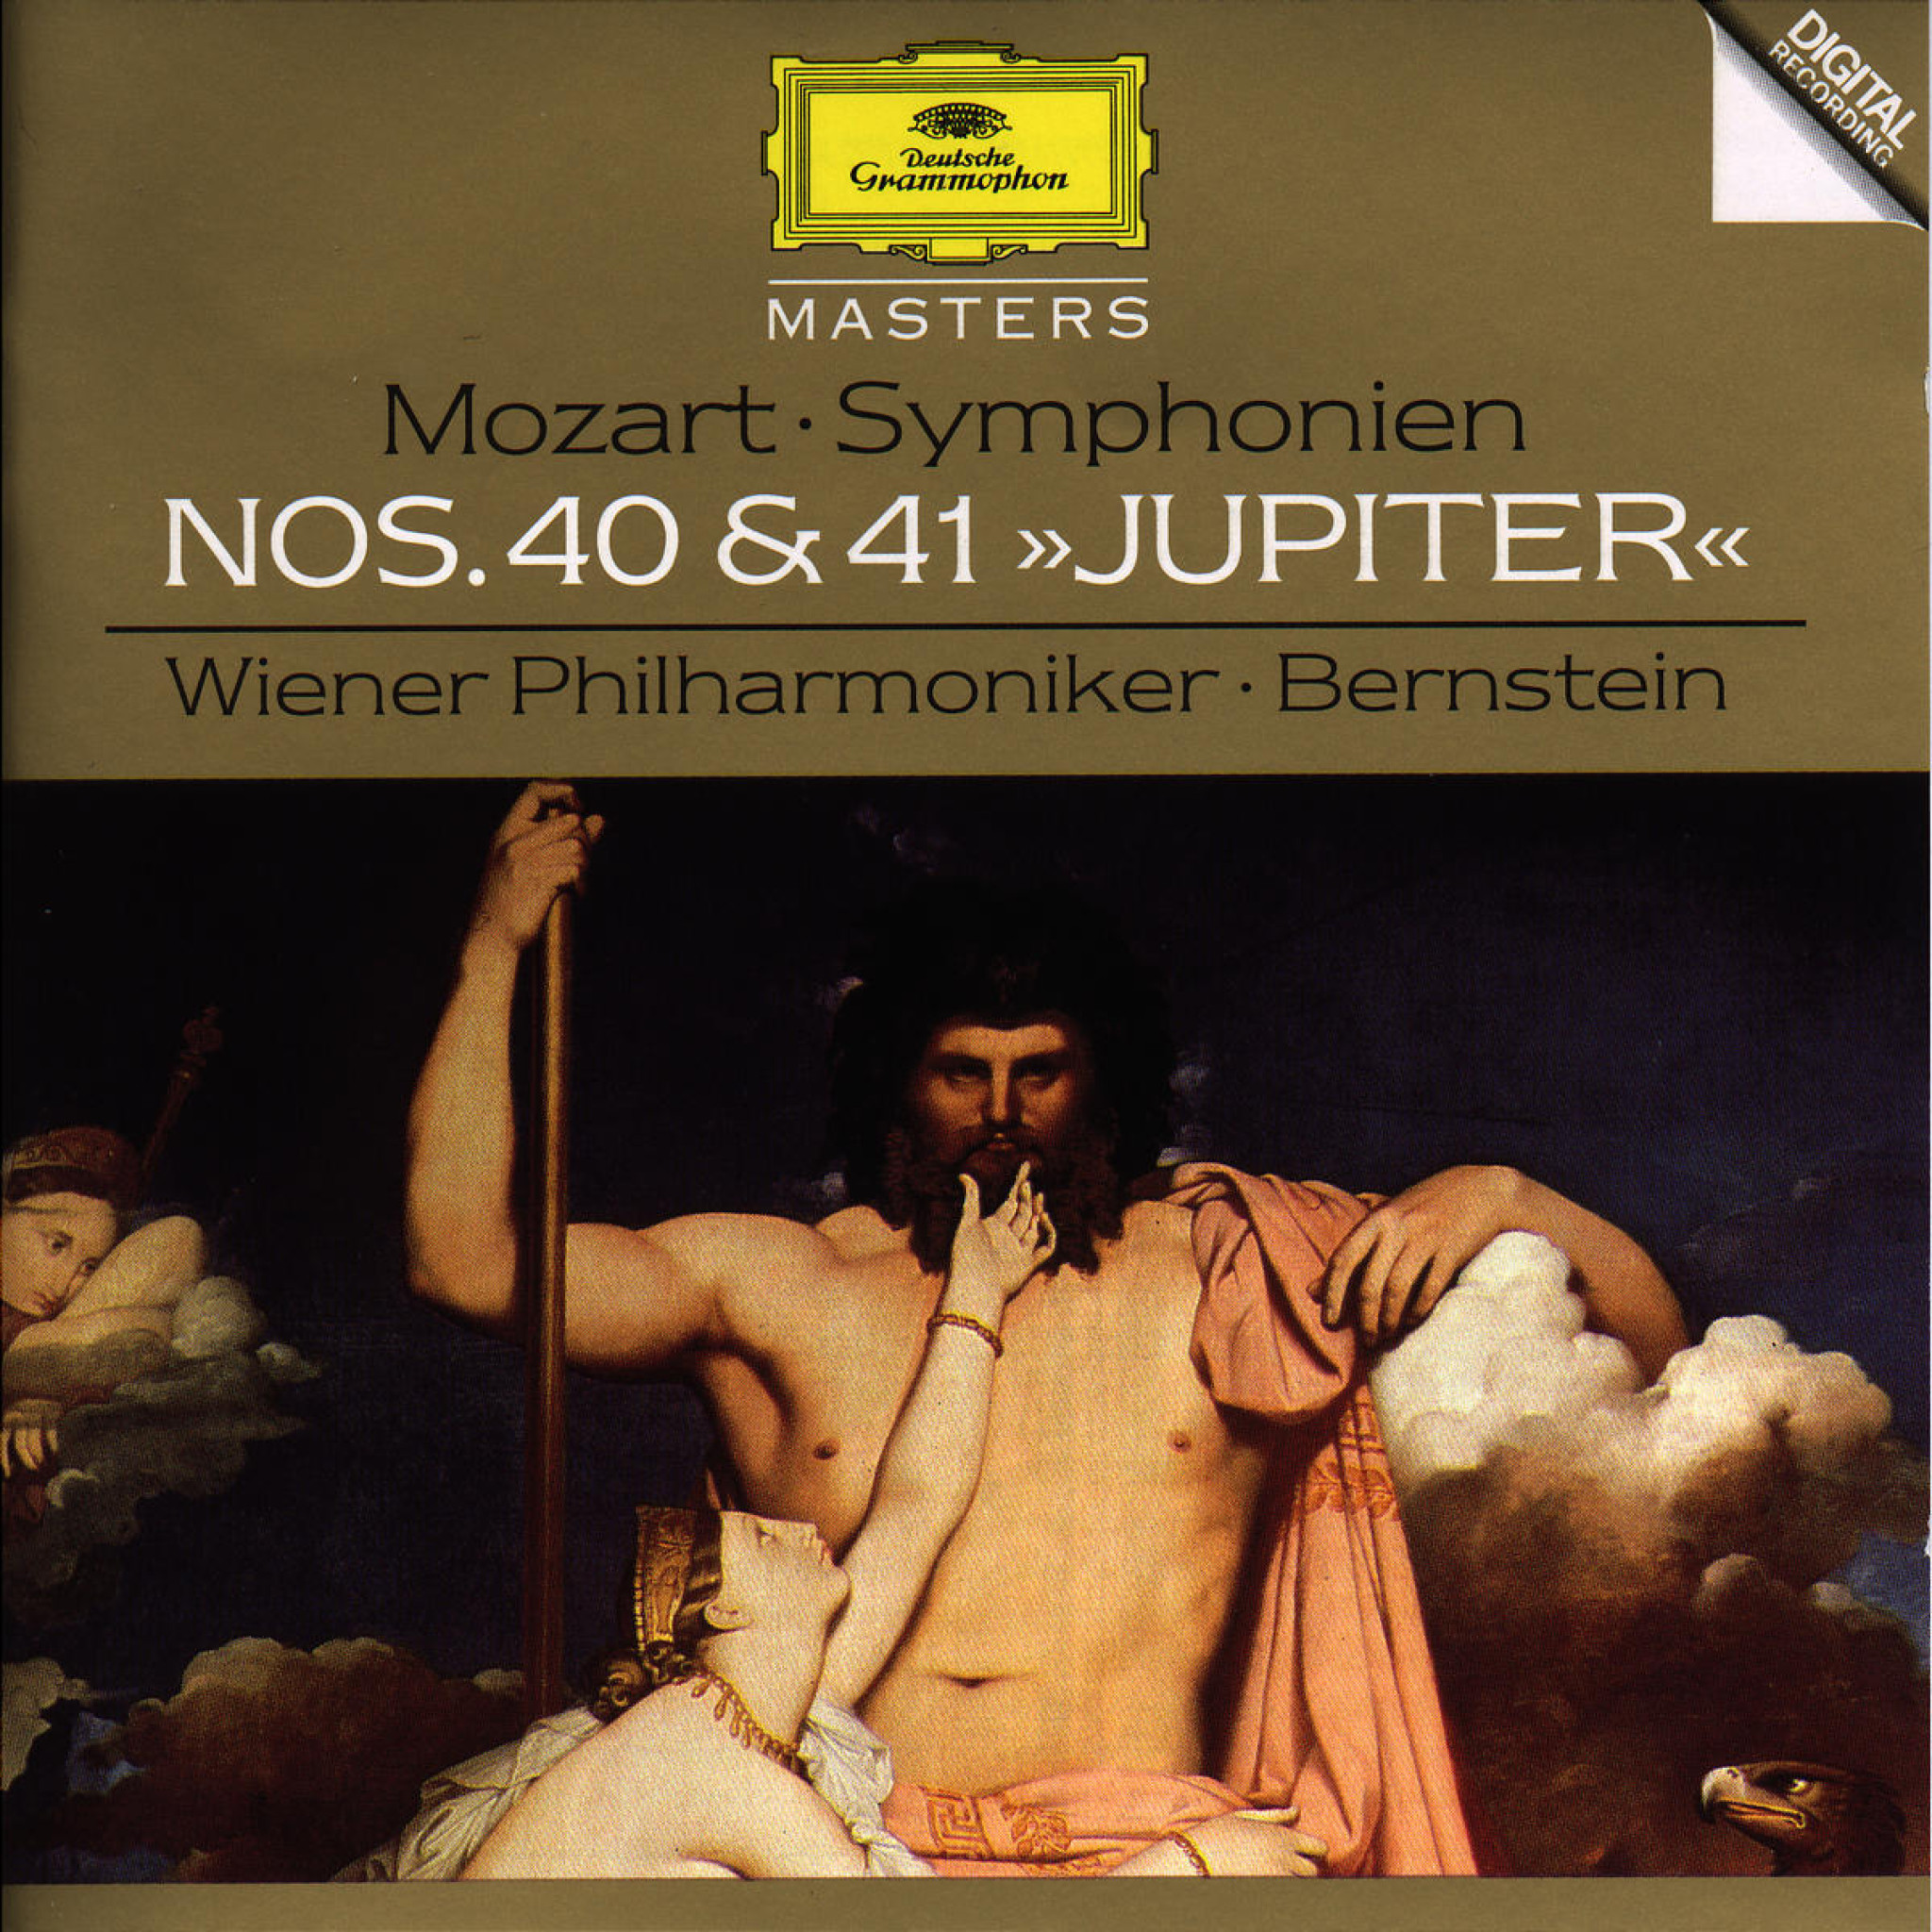 Mozart: Symphonies Nos.40 & 41 "Jupiter" 0028944554827